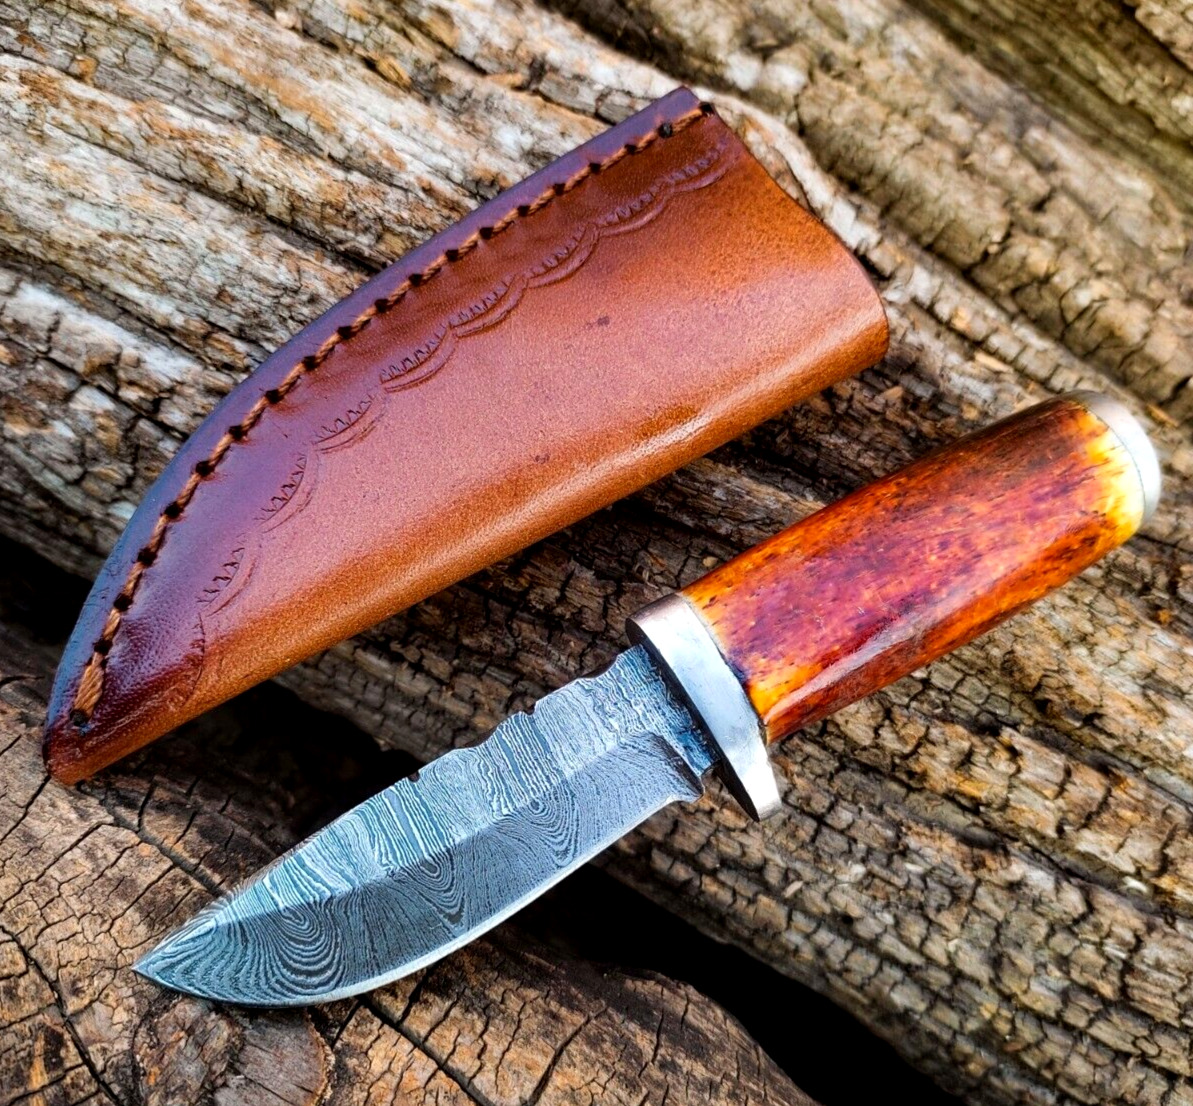 Handmade Bushcraft Knife - Custom Damascus Steel Survival Hunting KNIFE W/SHEATH